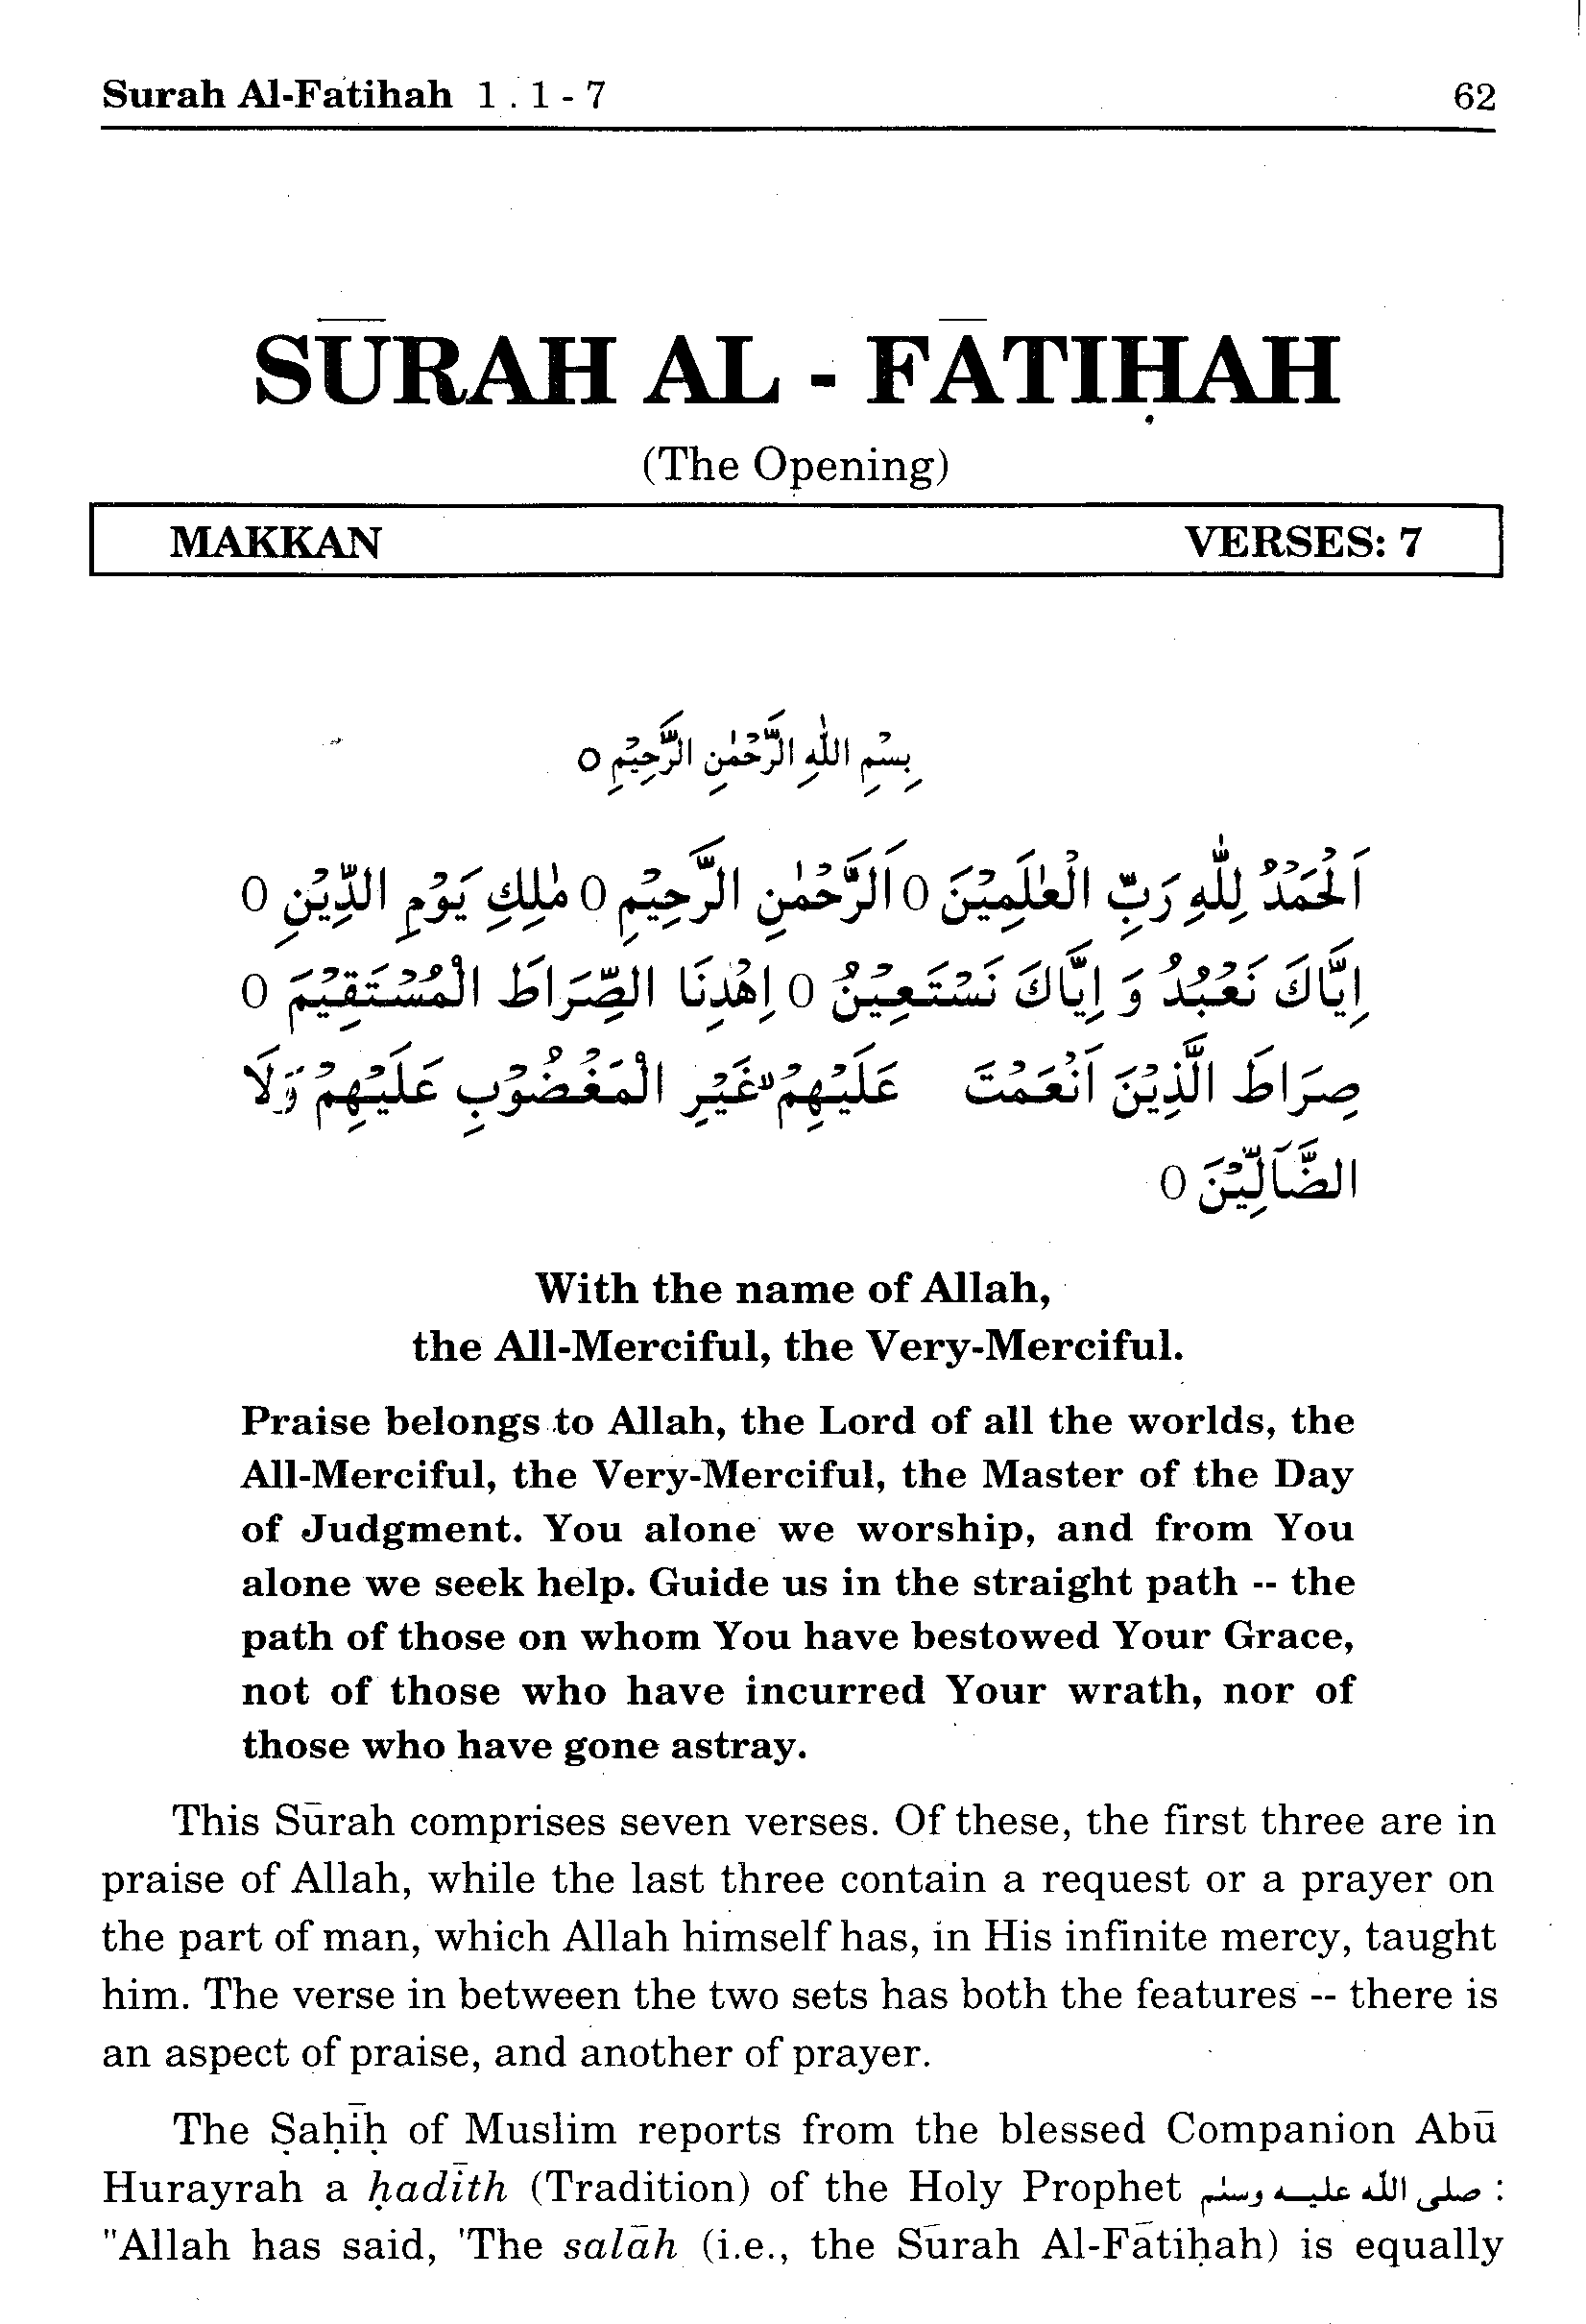 Surah waqiah english translation - servermusli